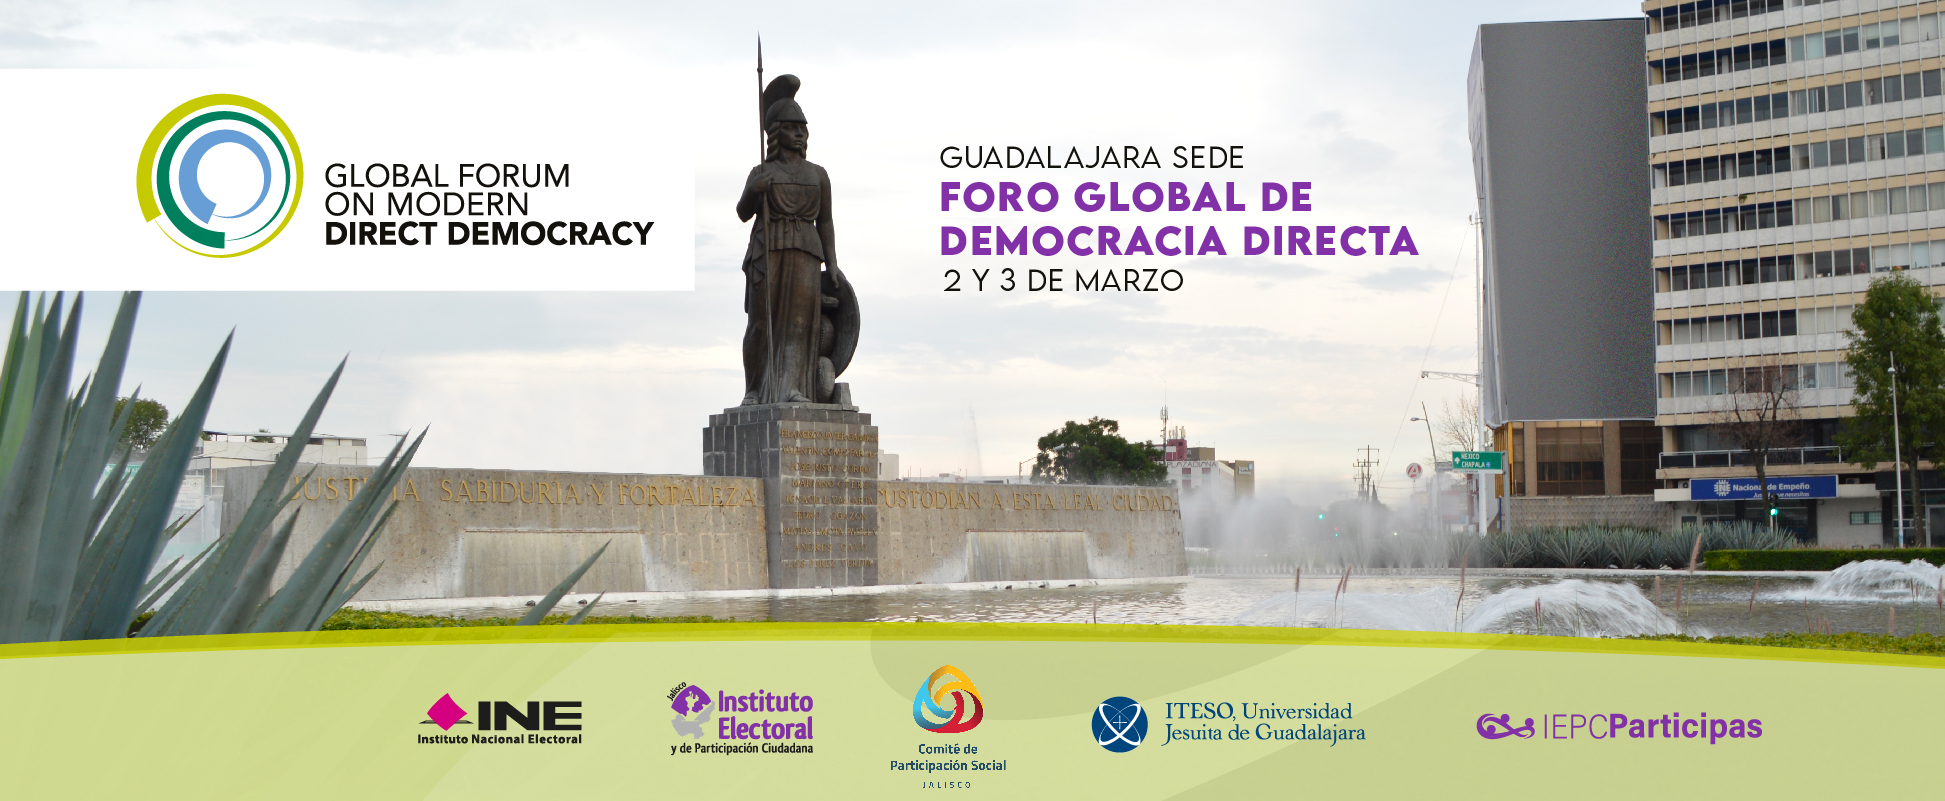 <a class="amazingslider-posttitle-link" href="http://www.iepcjalisco.org.mx/participacion-ciudadana/foro-global-de-democracia-directa-en-jalisco/">Foro Global de Democracia Directa en Jalisco</a>